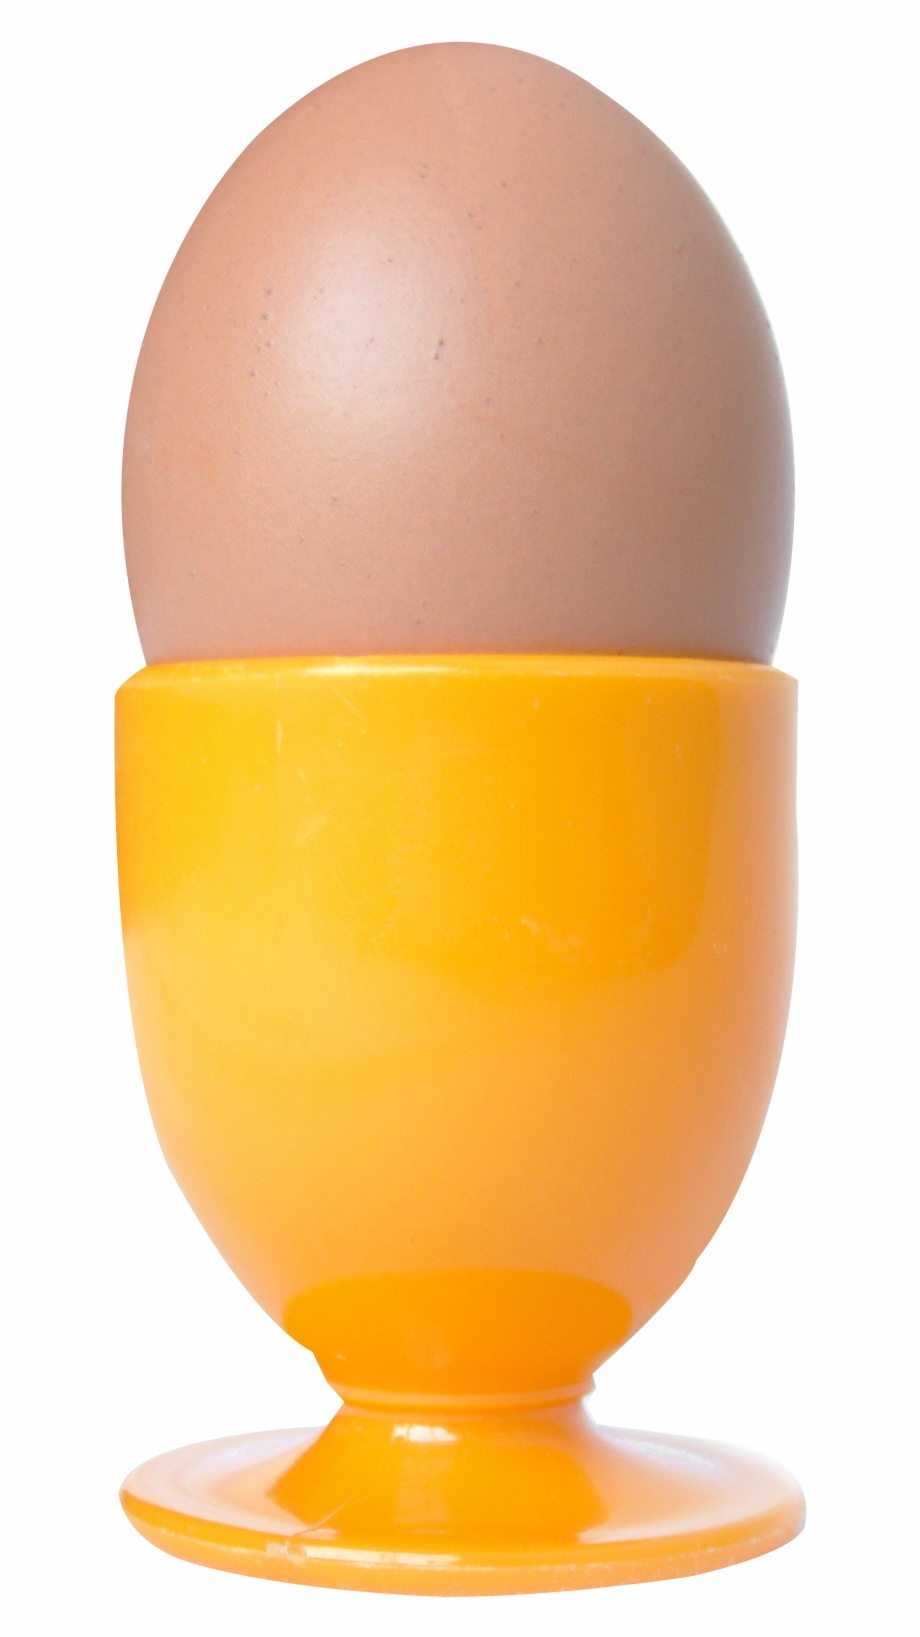 Egg Png Transparent Image Egg In Cup Png